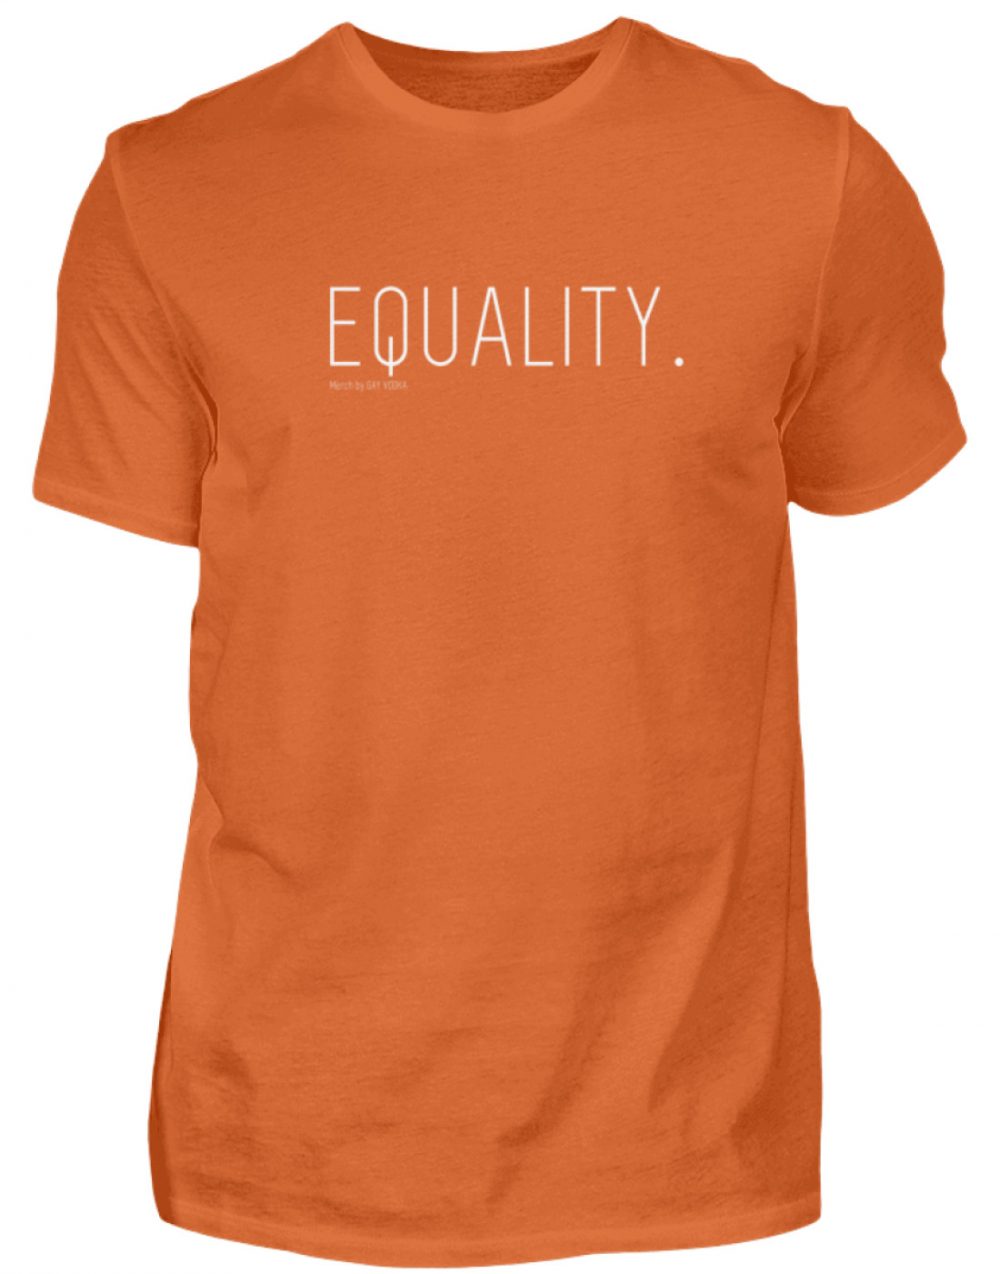 EQUALITY. - Herren Premiumshirt-2953